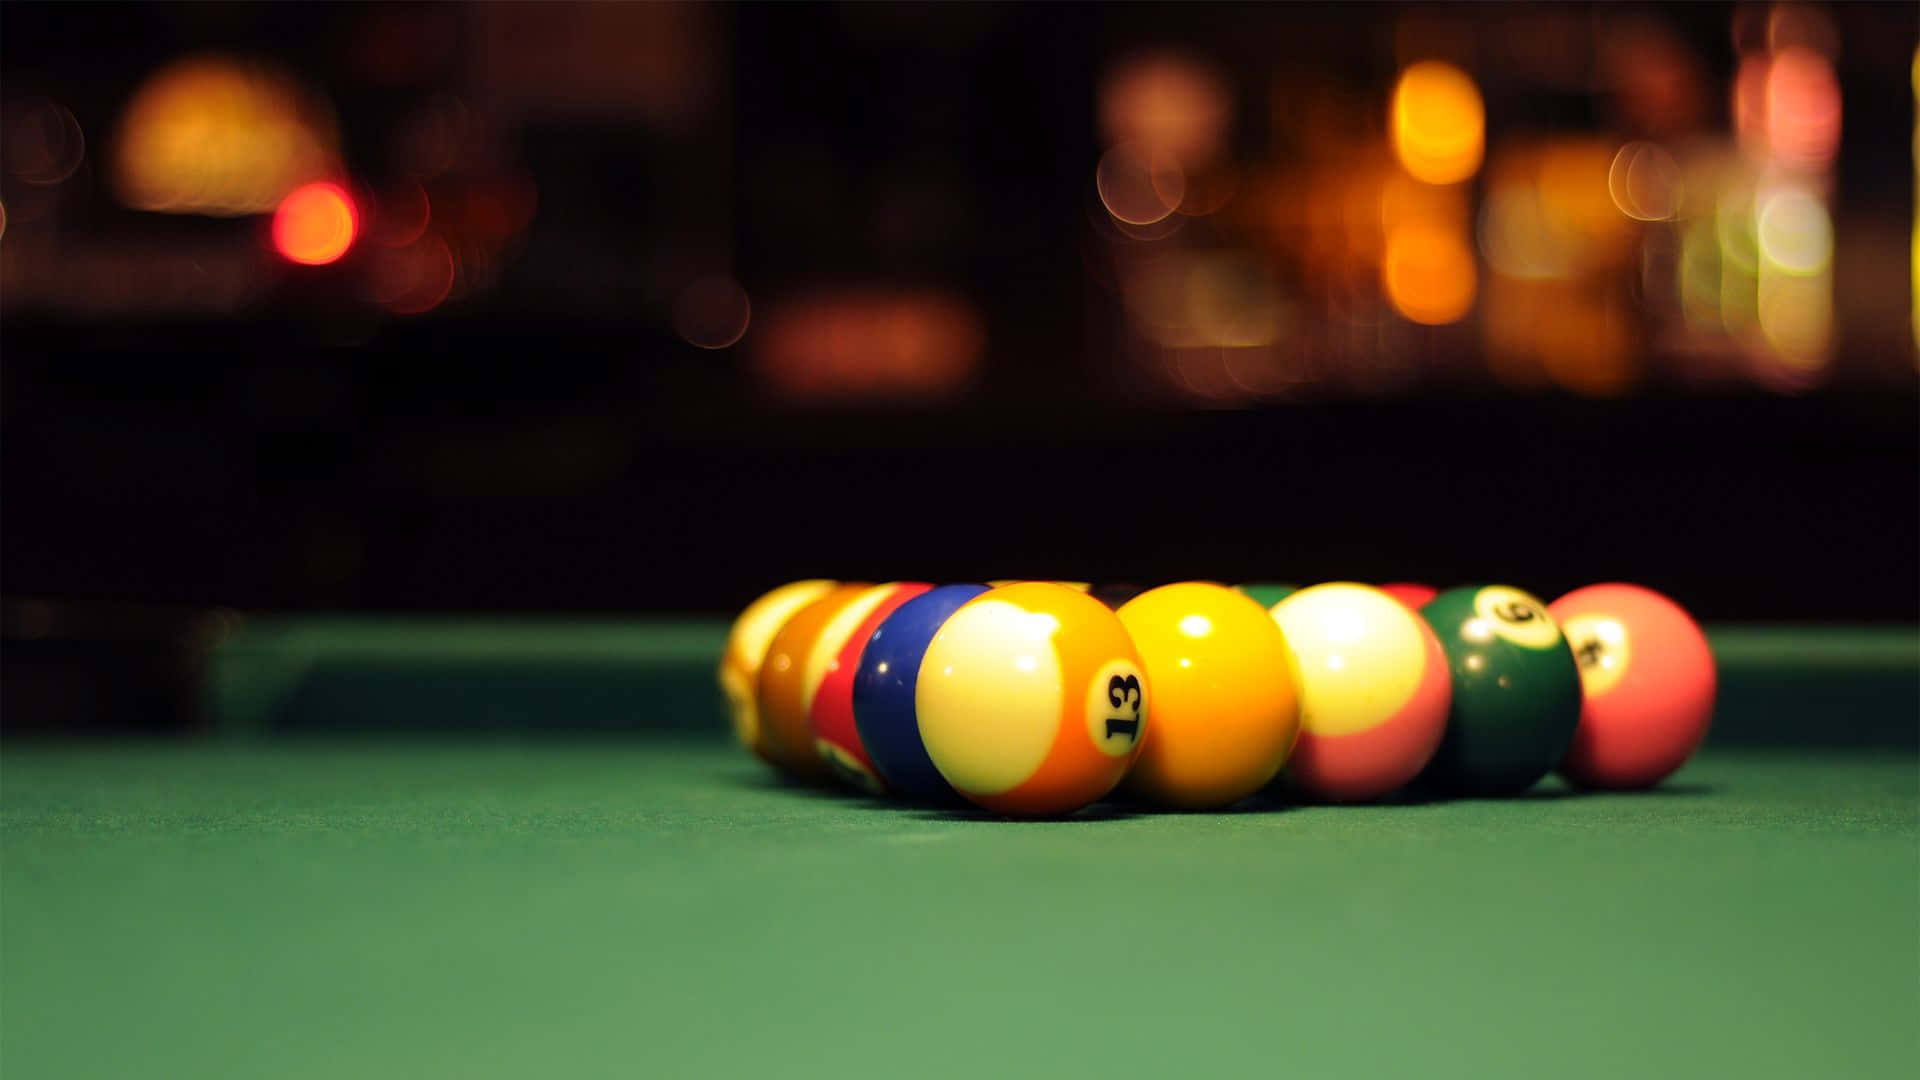 Billiardpool Table Balls Vintage Would Be Translated To 